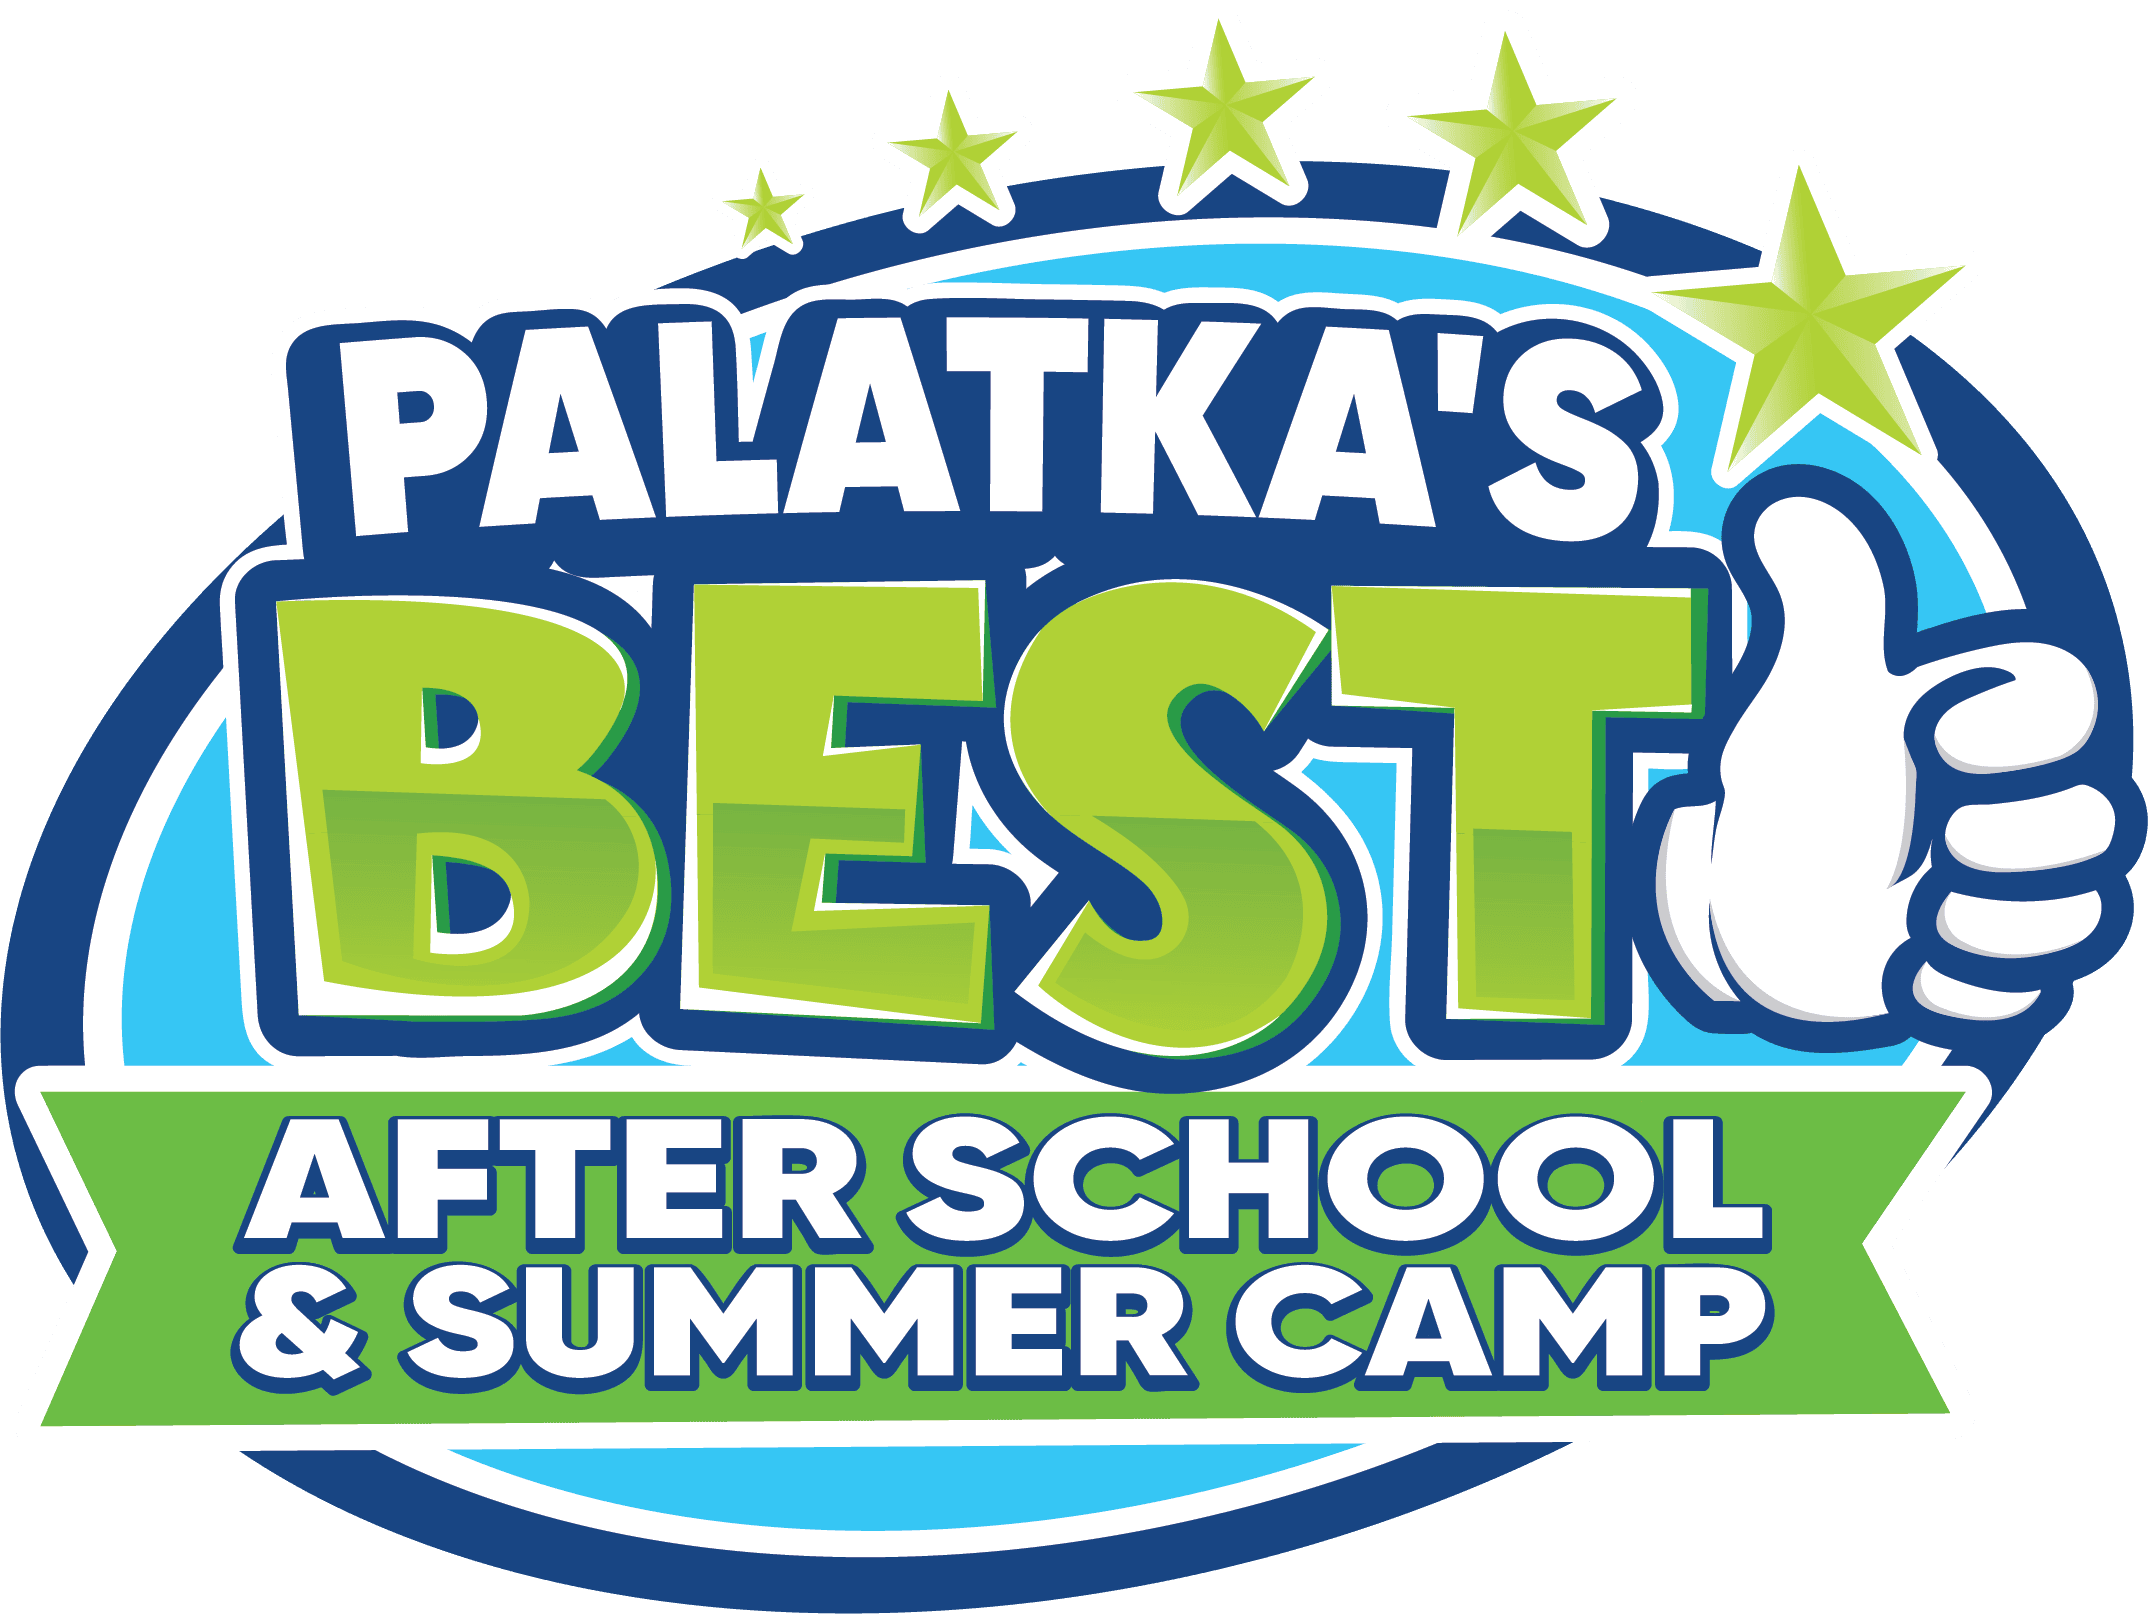 Palatka's Best After School & Summer Camp